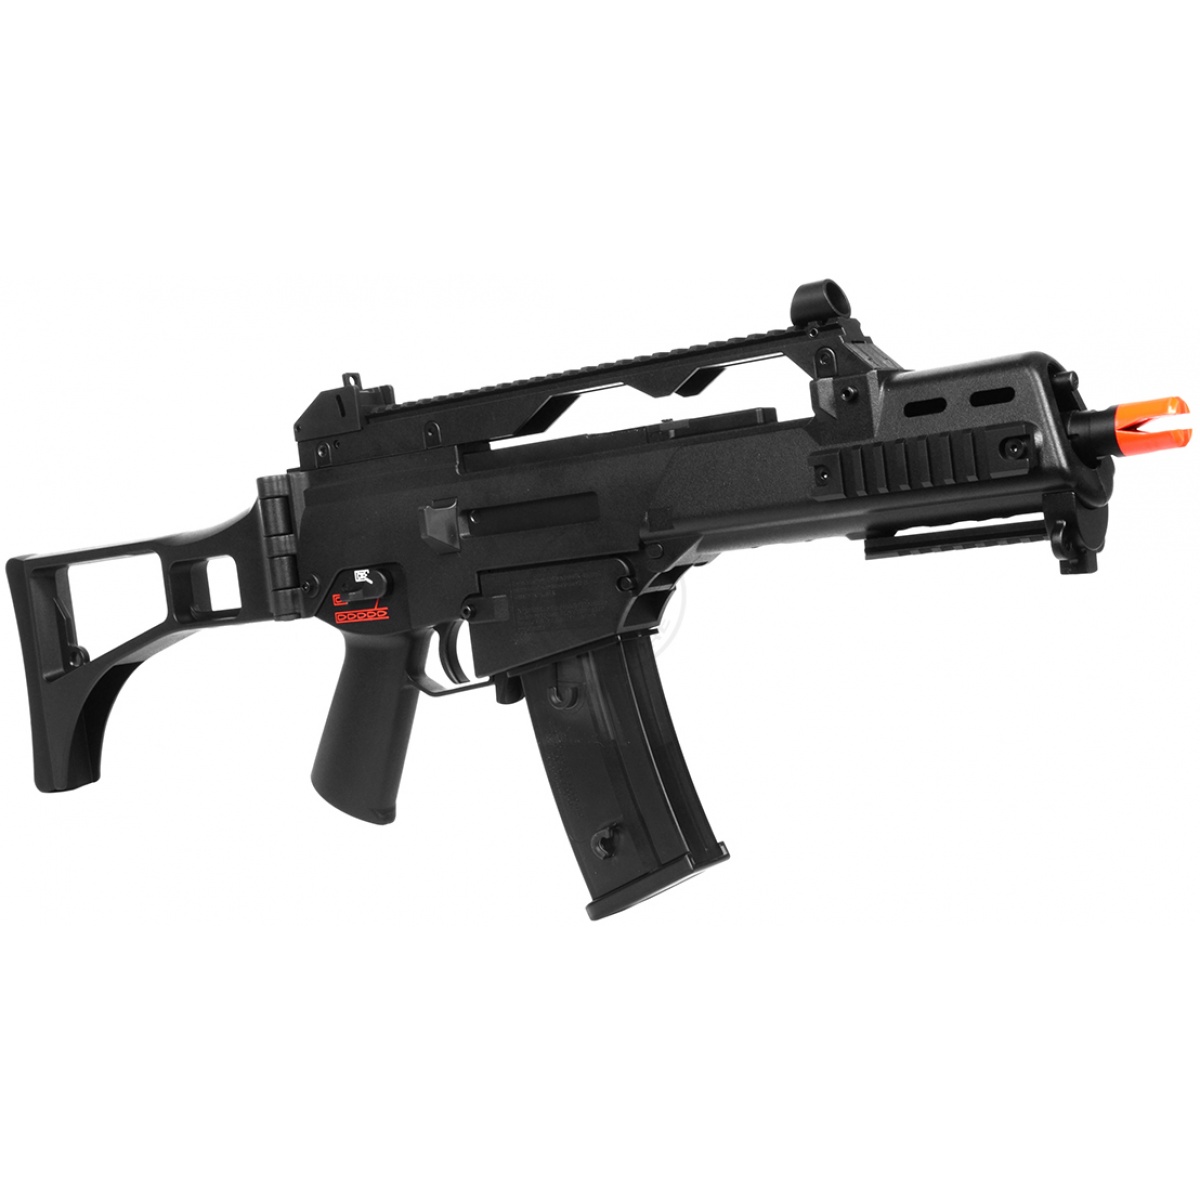 Umarex/ Elite Force H&K G36C Metal Gearbox Airsoft AEG Rifle by